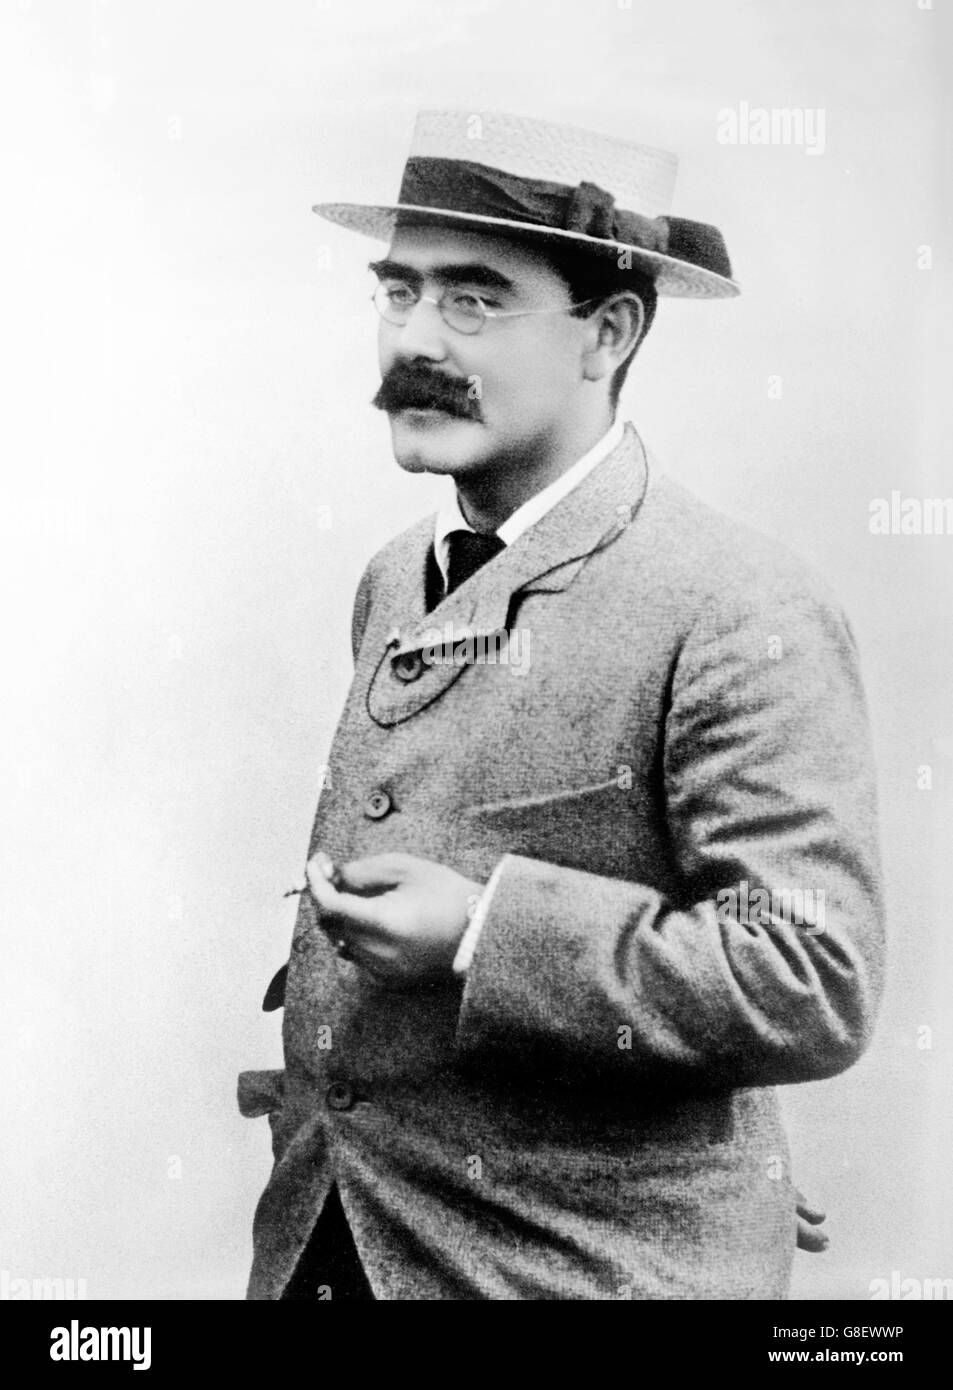 Rudyard Kipling. Portrait of the English writer, Joseph Rudyard Kipling. Photo by Bain News Service, date unknown Stock Photo